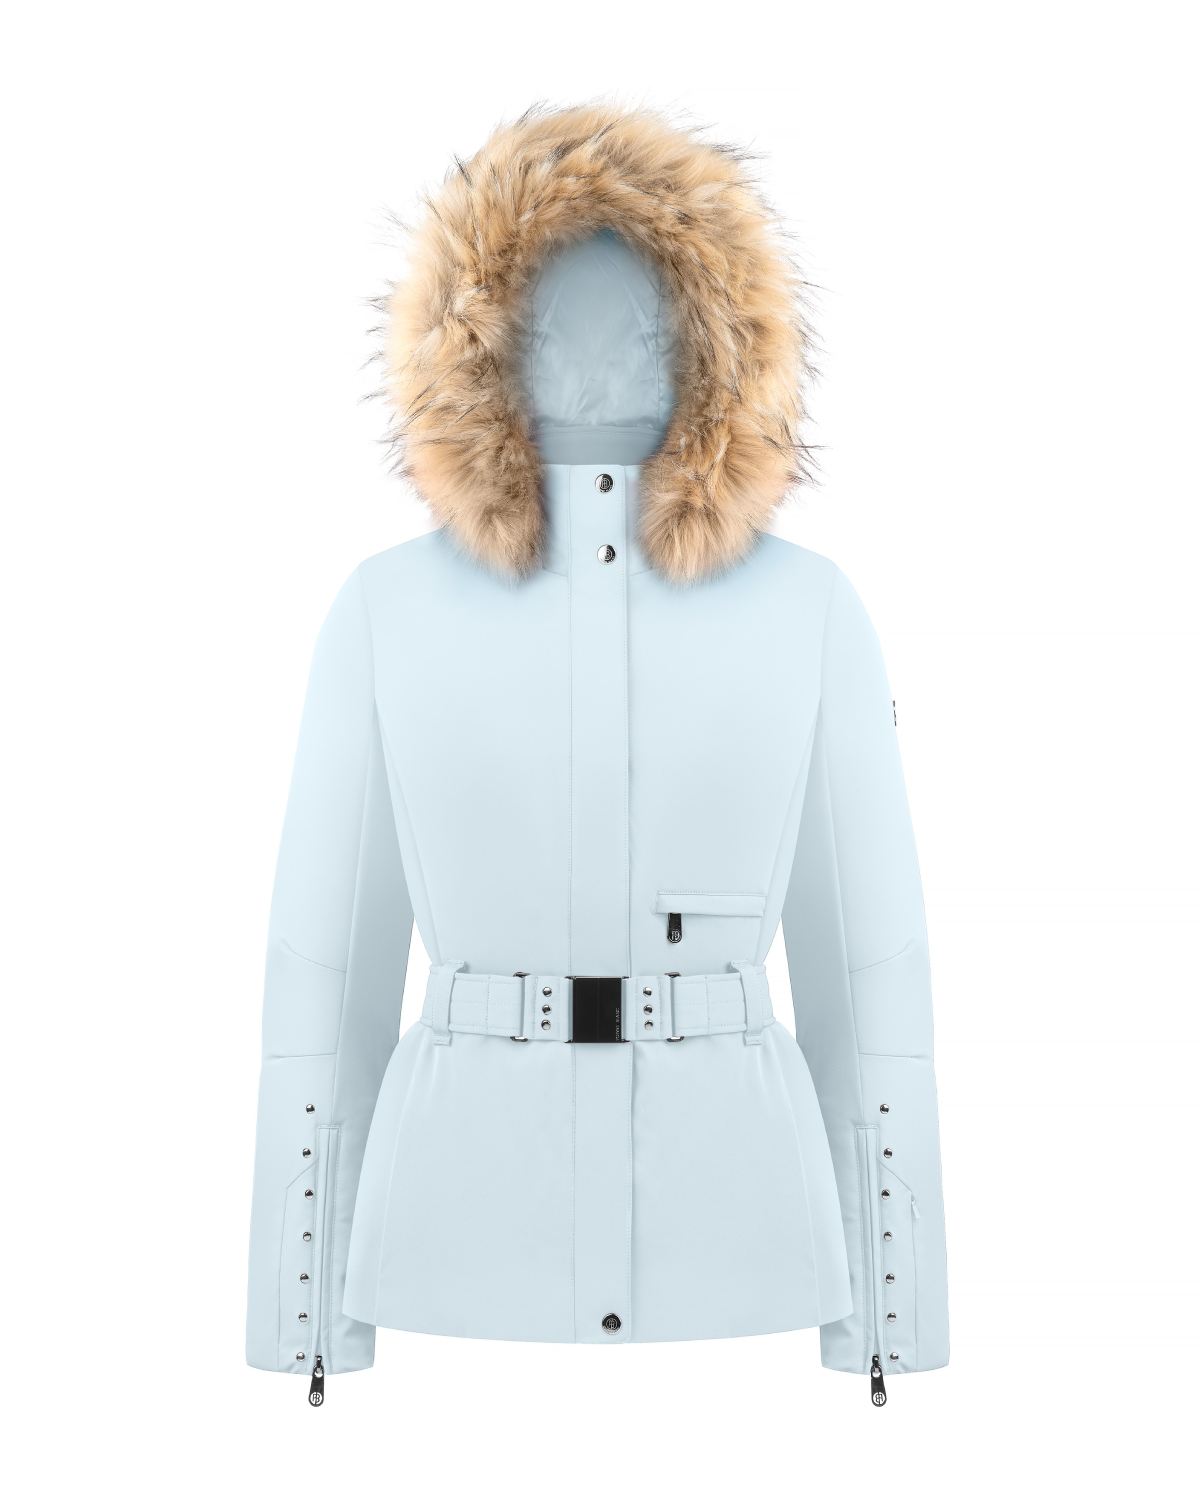 Poivre Blanc – Lifestyle Jacket 4701 Oxford Blue Women's Jacket – Blue,  blue, l : : Fashion